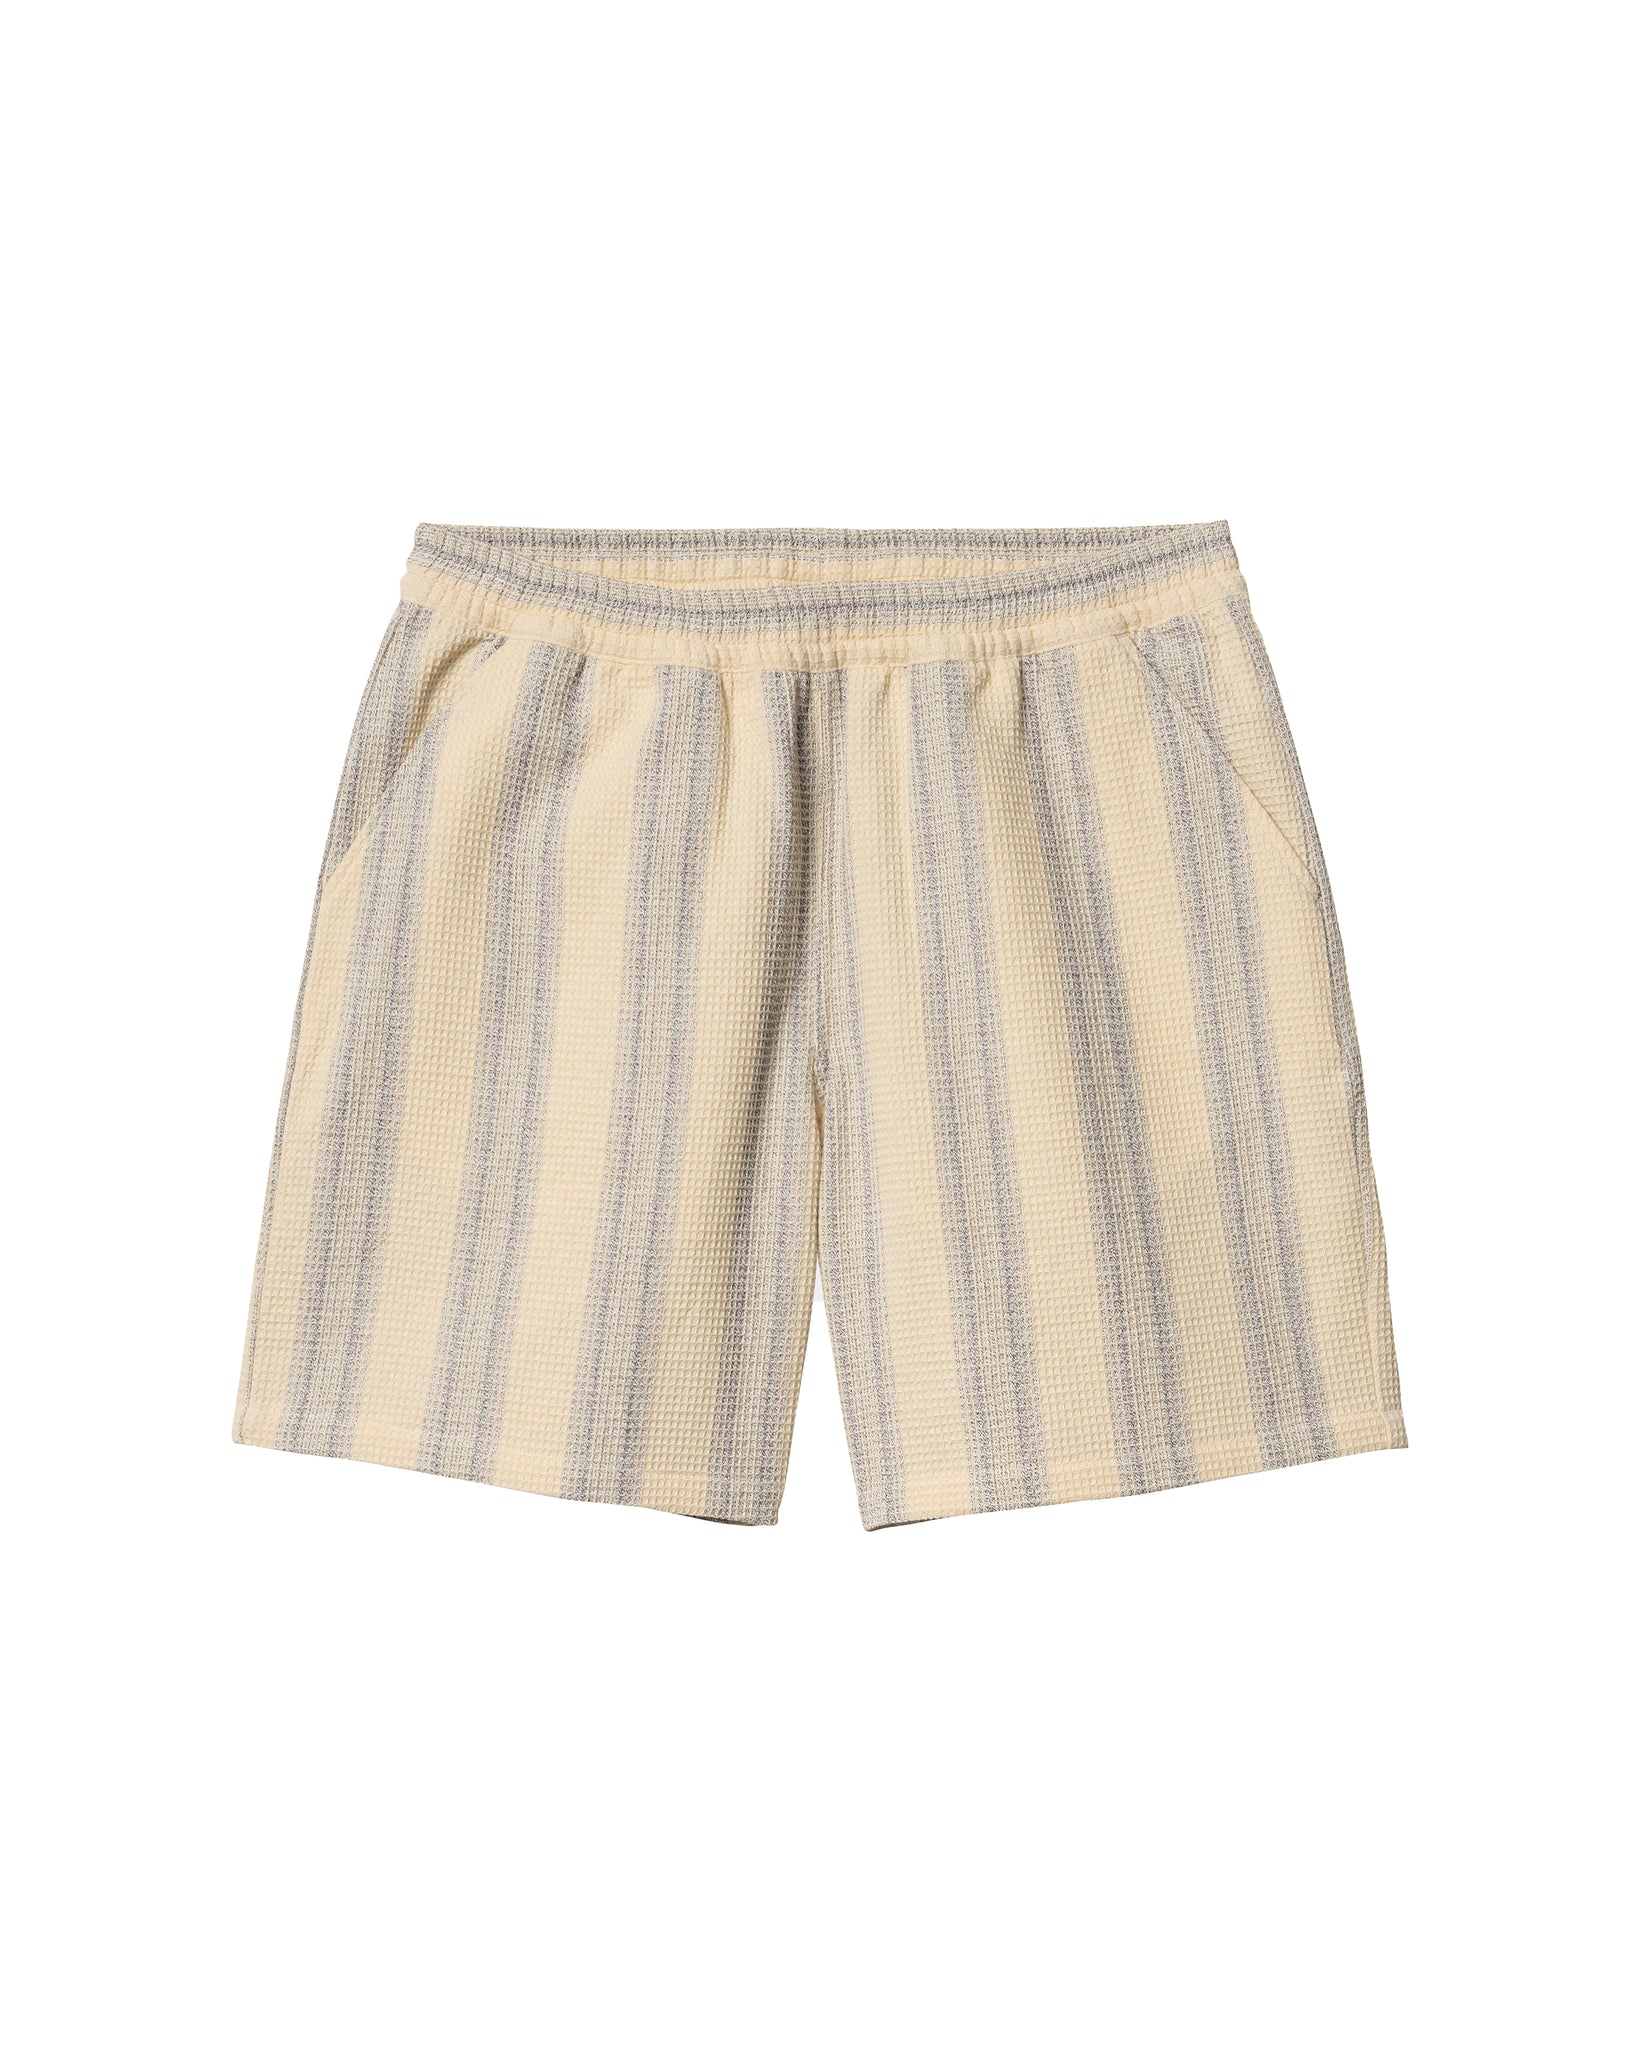 Shorts Dodson - Dodson Stripe/Natural